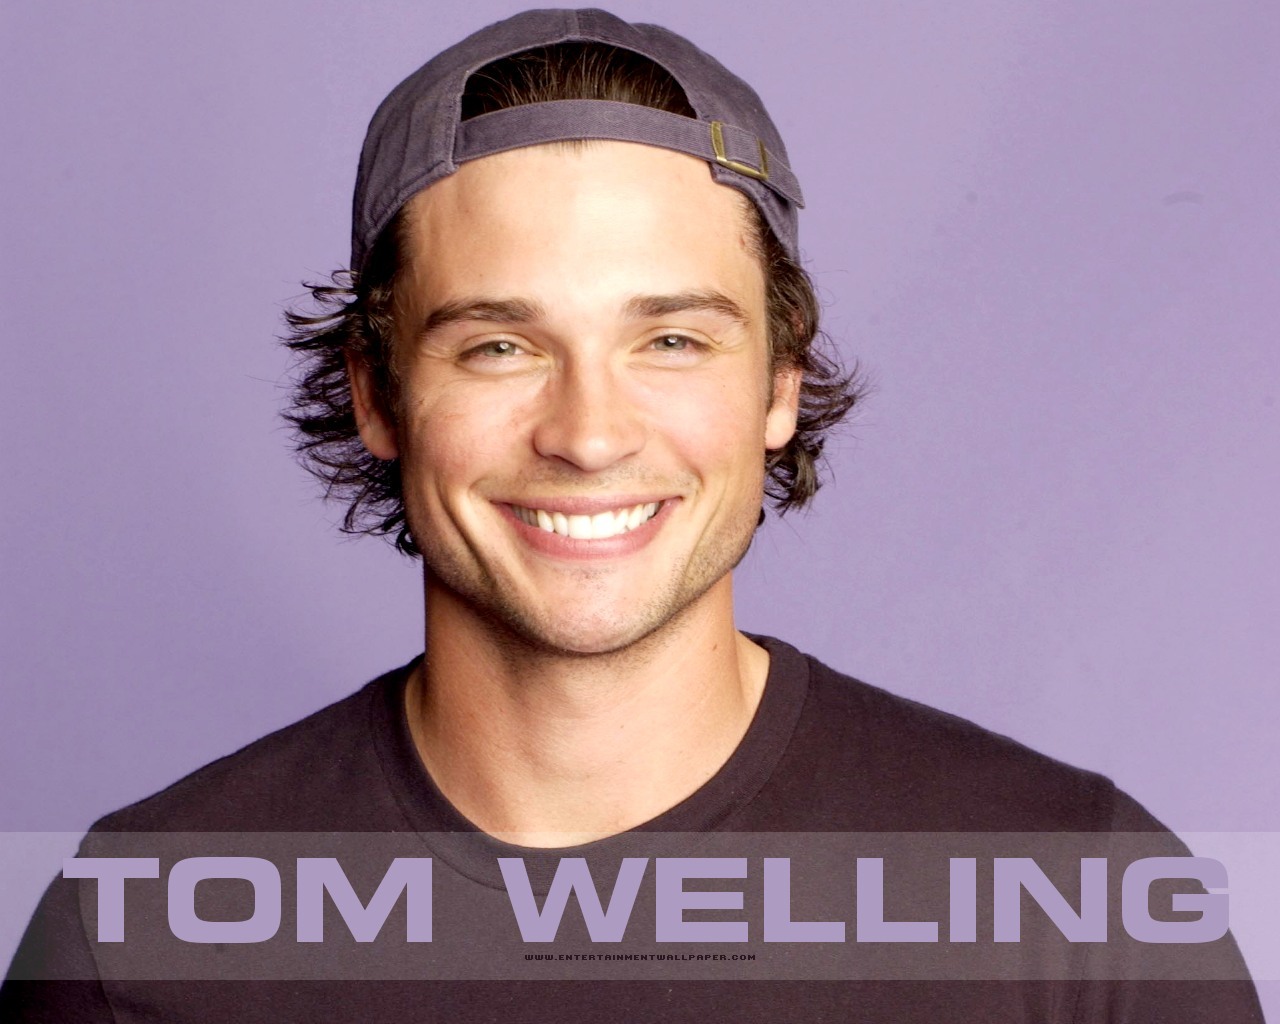 Tom Welling Wallpaper - Original size, download now.